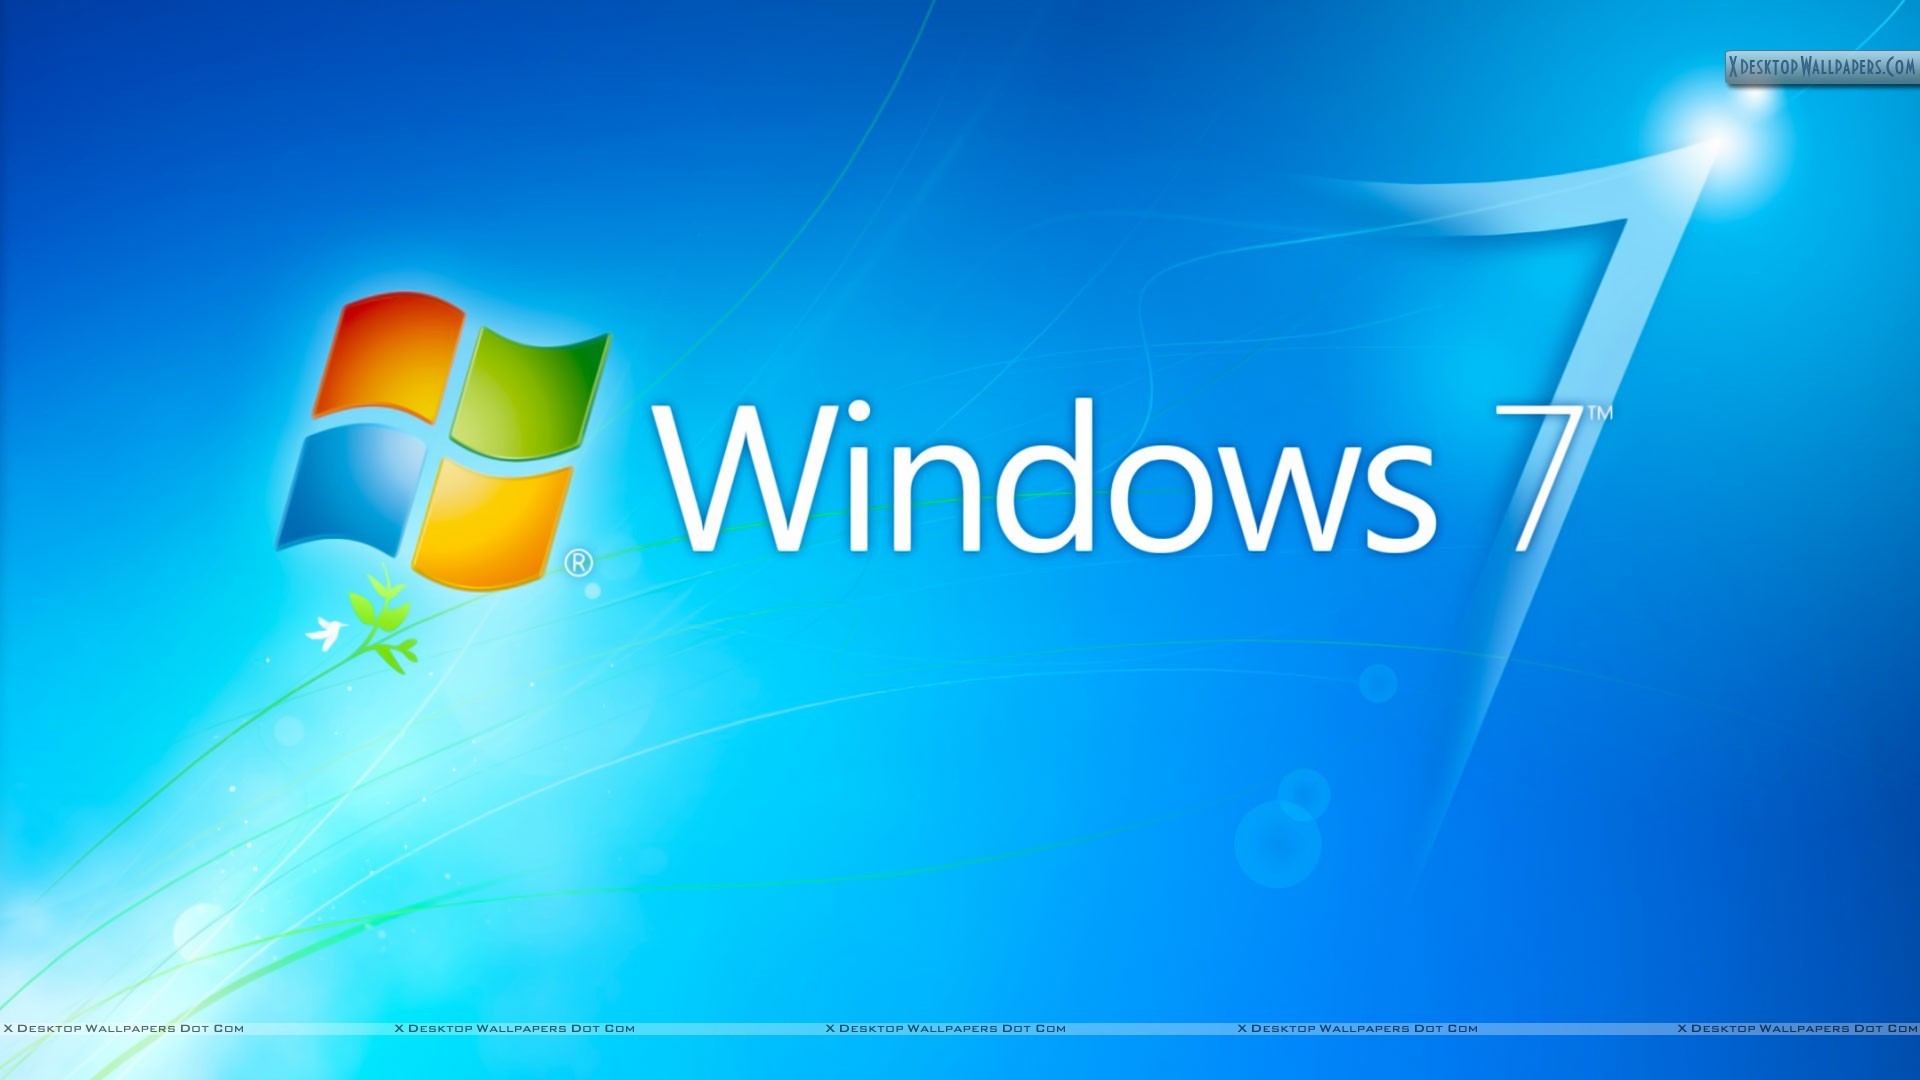 Windows 7 Wallpaper Download Hd - 1920x1080 Wallpaper 